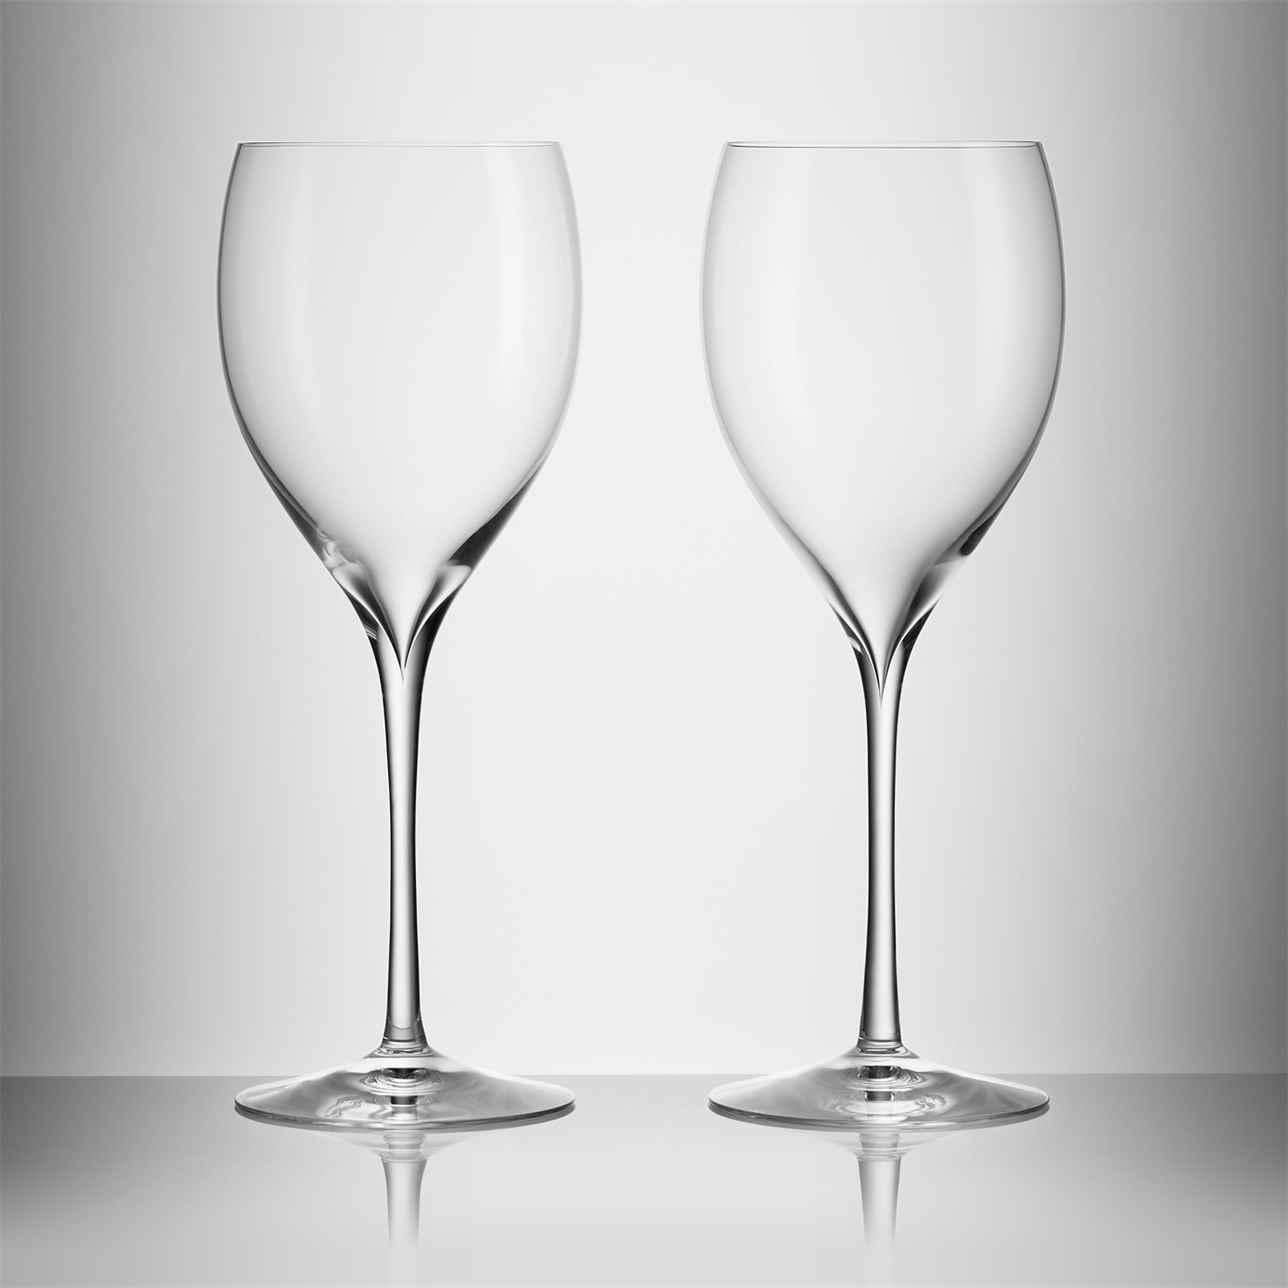  Elegance Sauvignon Blanc Wine Glass, Set of 2 